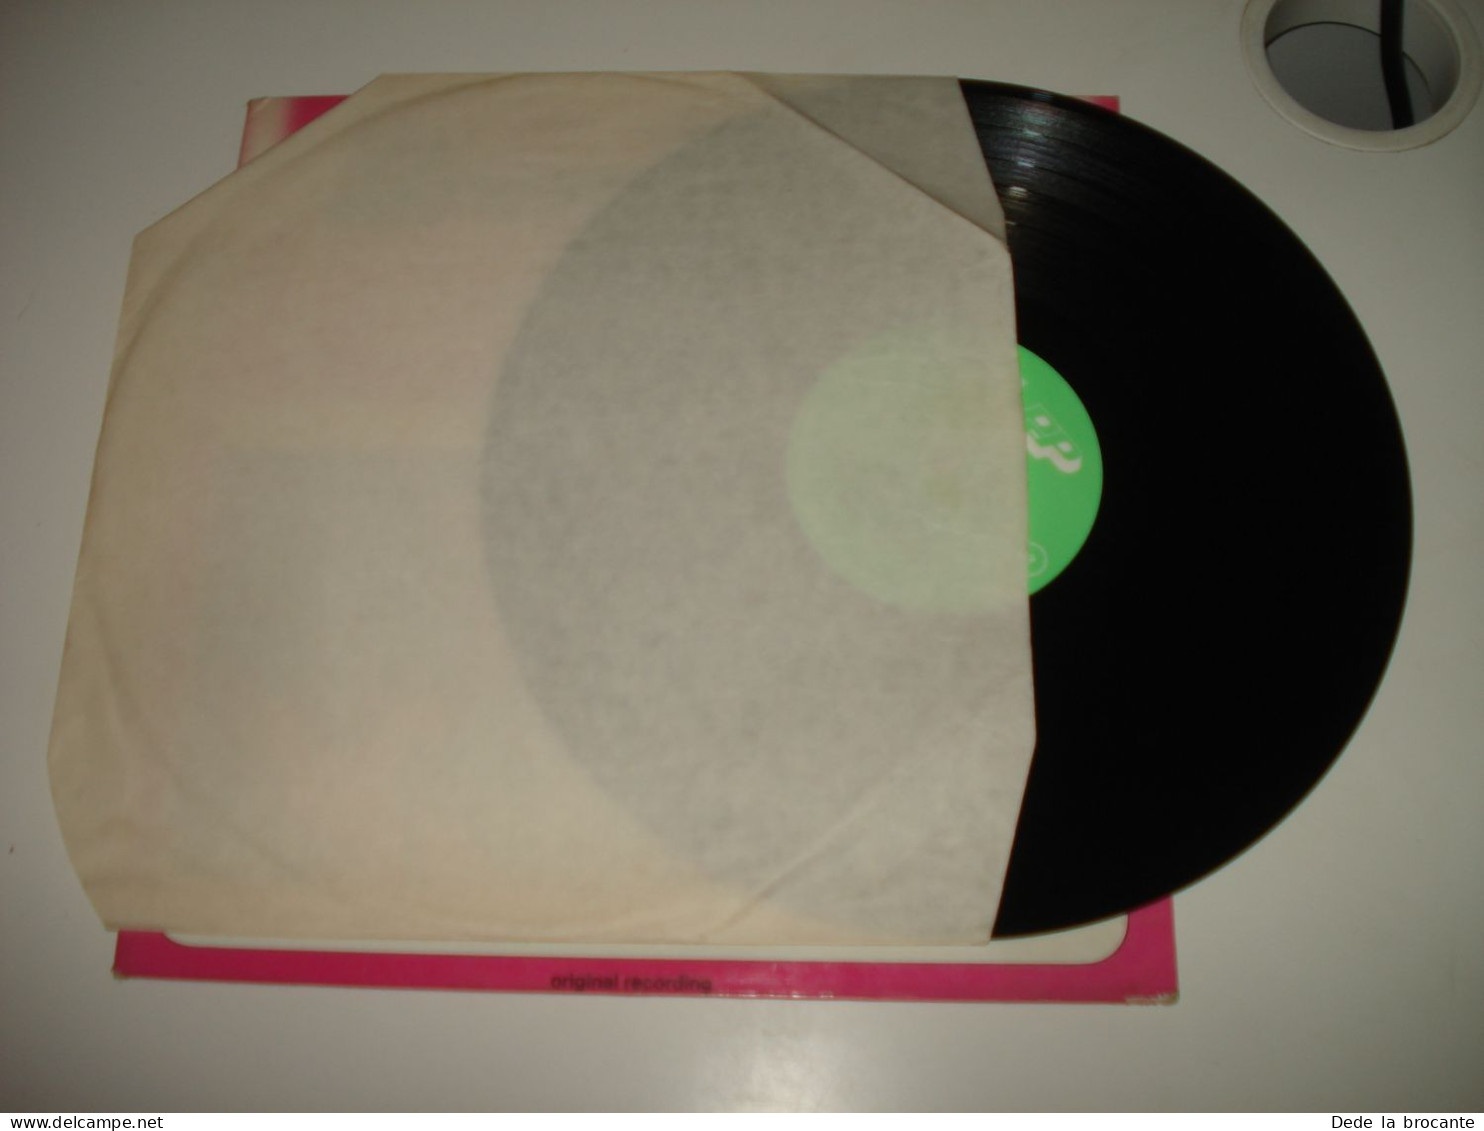 B8 / Brenda Lee – I'm Sorry - 1  LP  - 4M 032-97089 - Belgique  1975  M/EX - Country Et Folk